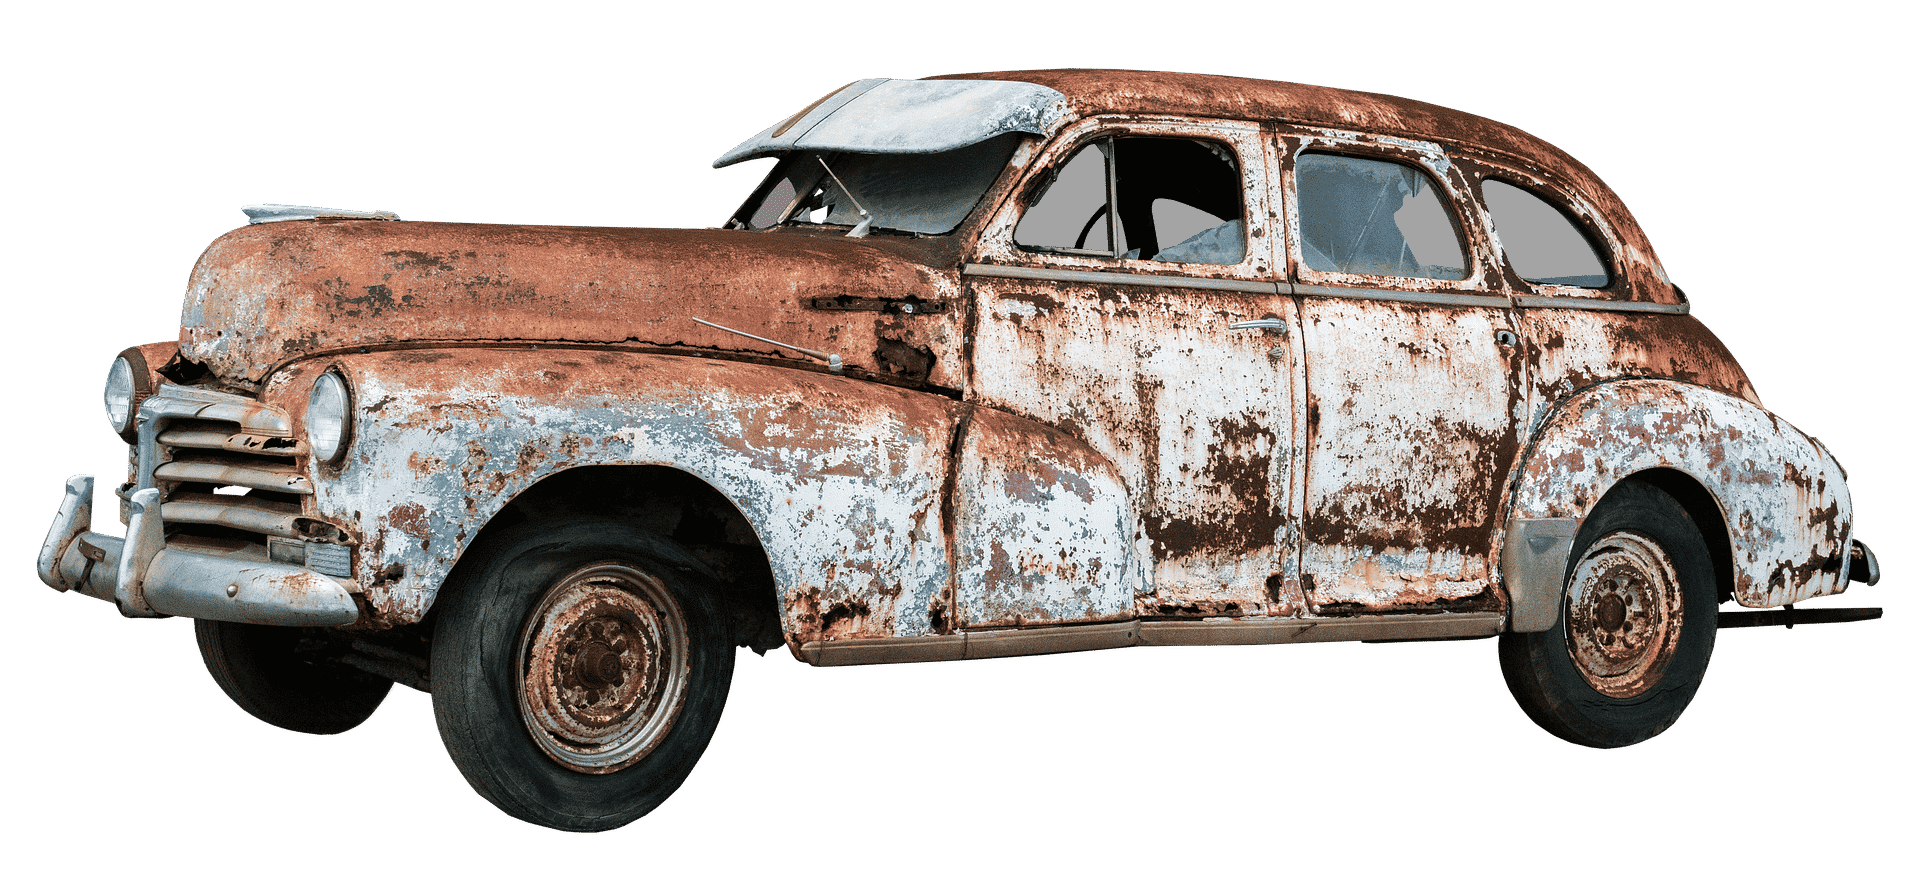 Car rust фото 89